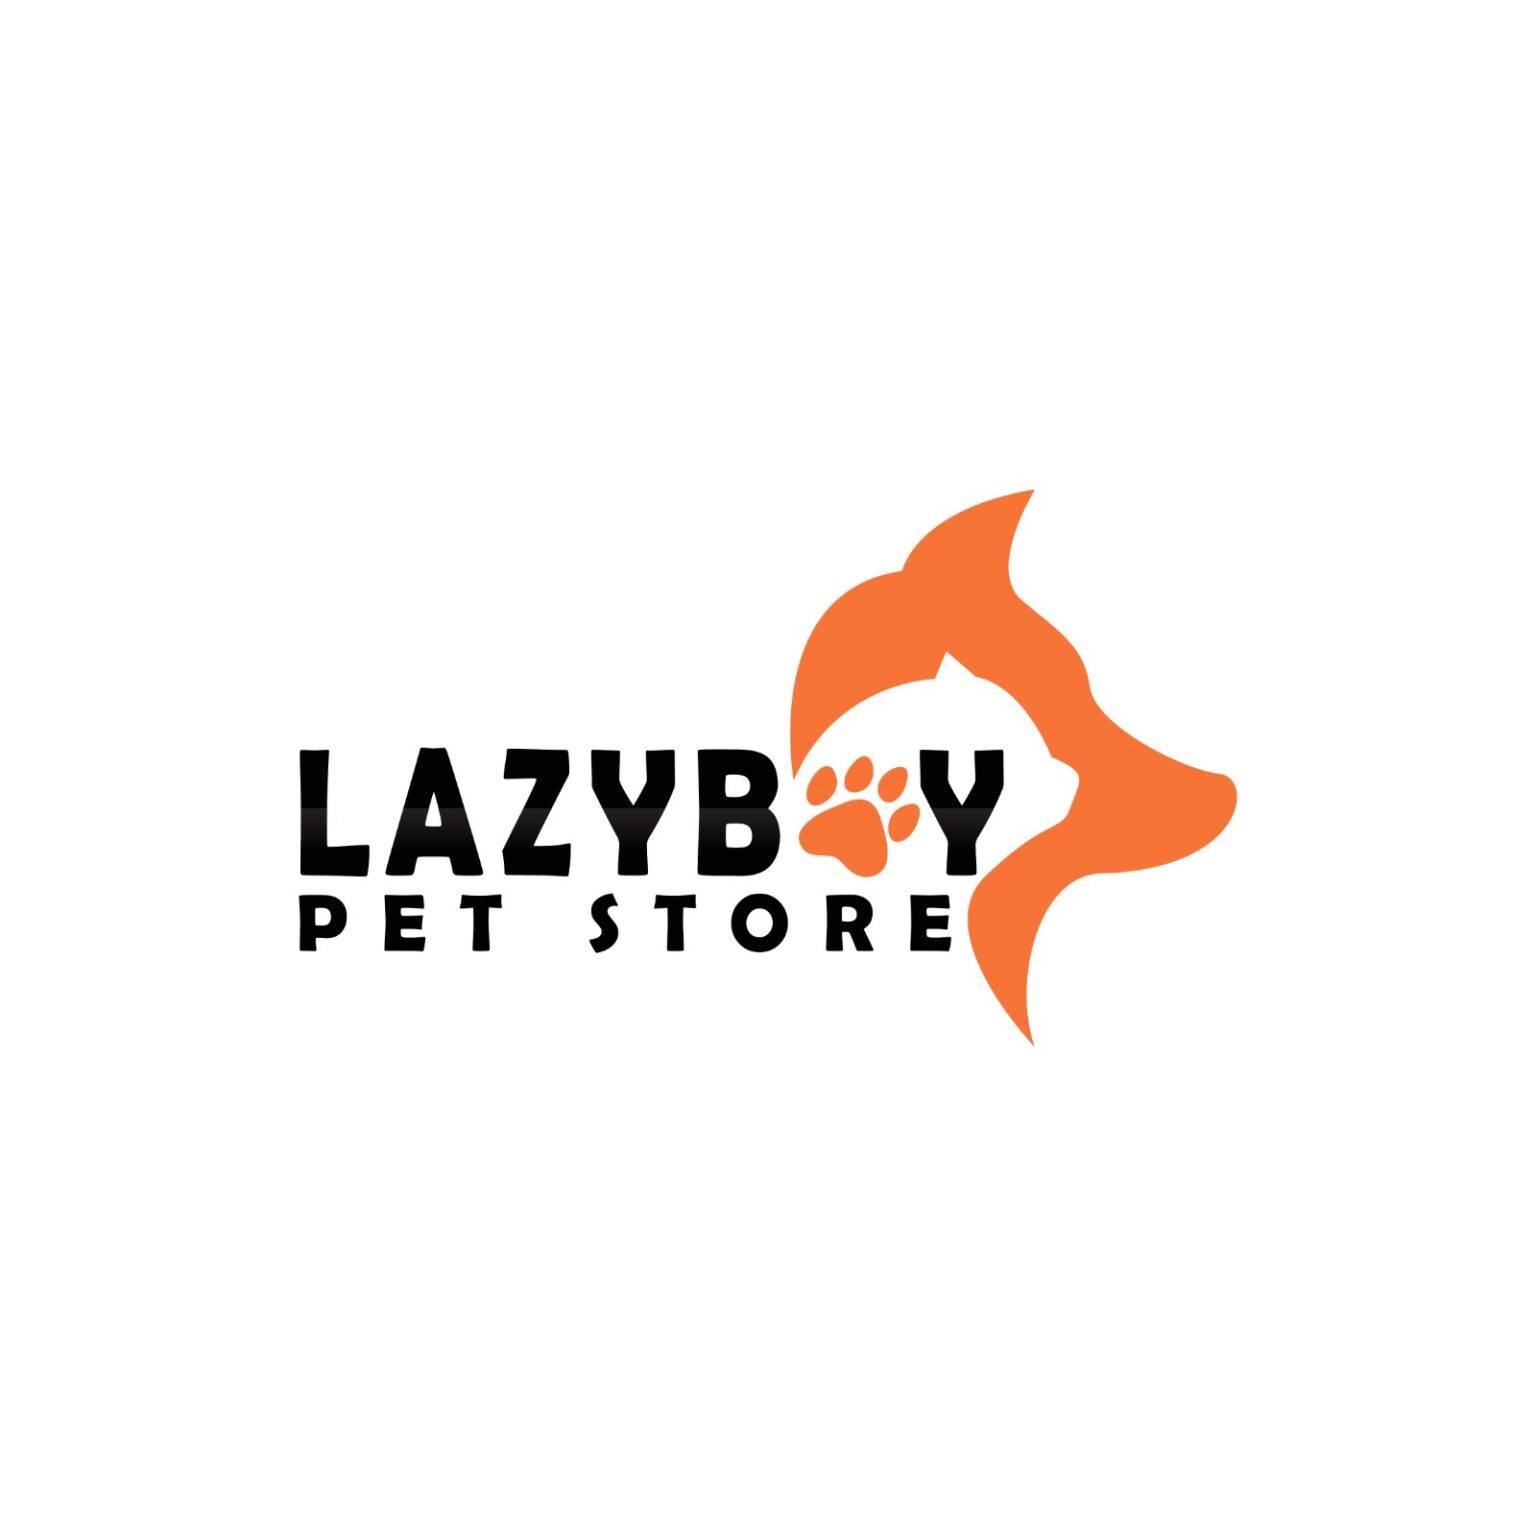 Lazy boy pet store <br> Roberto Jr.